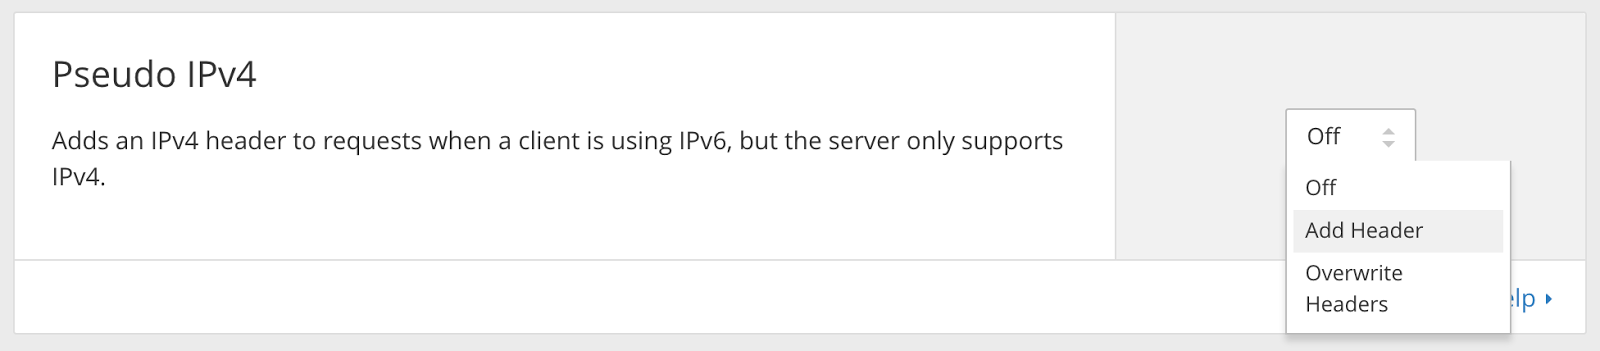 Pseudo IPv6